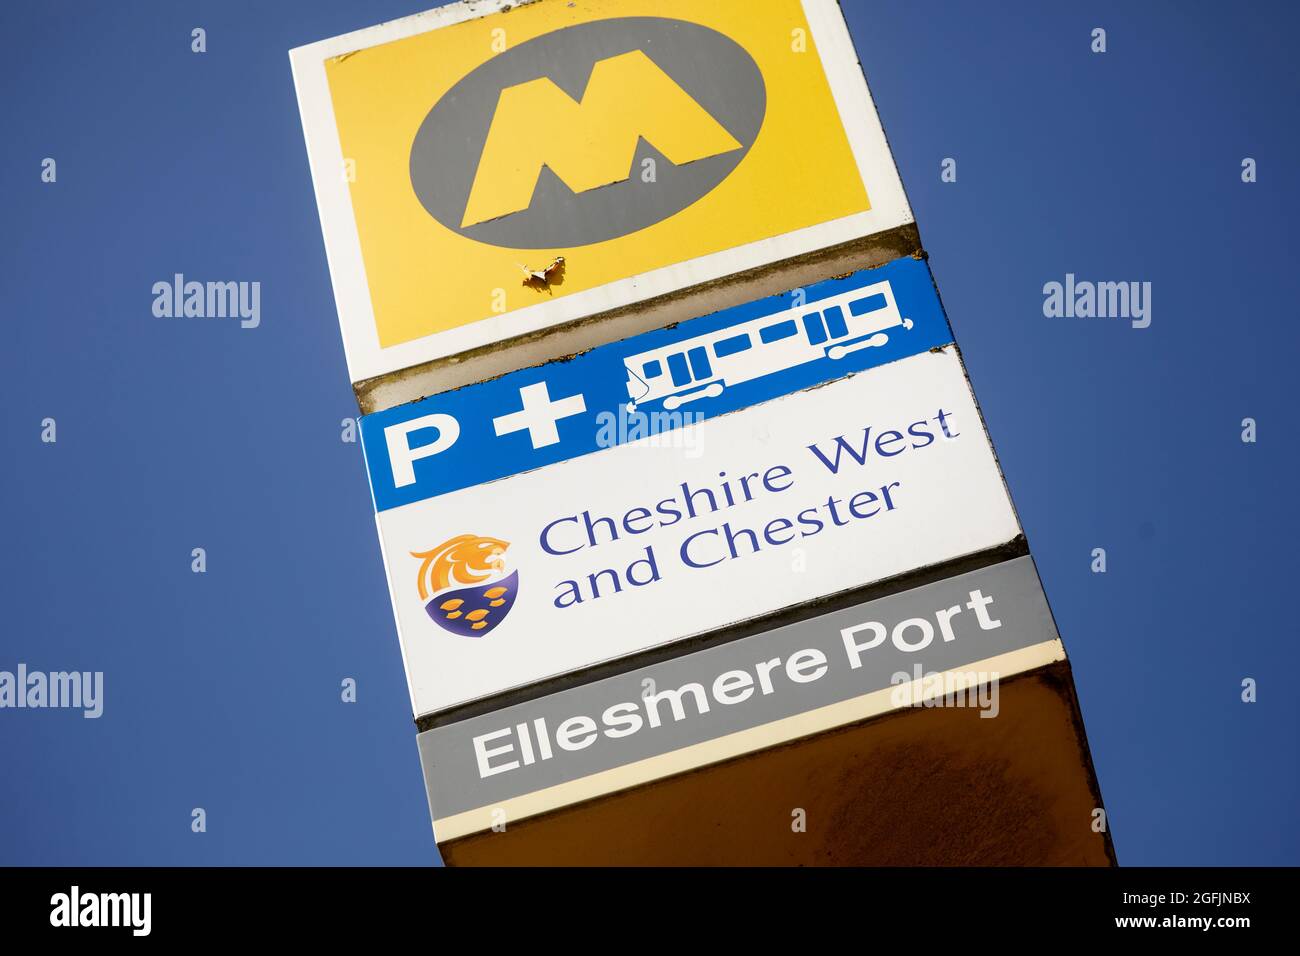 Ellesmere Port train station Cheshire, Merseyrail railway sign Stock Photo